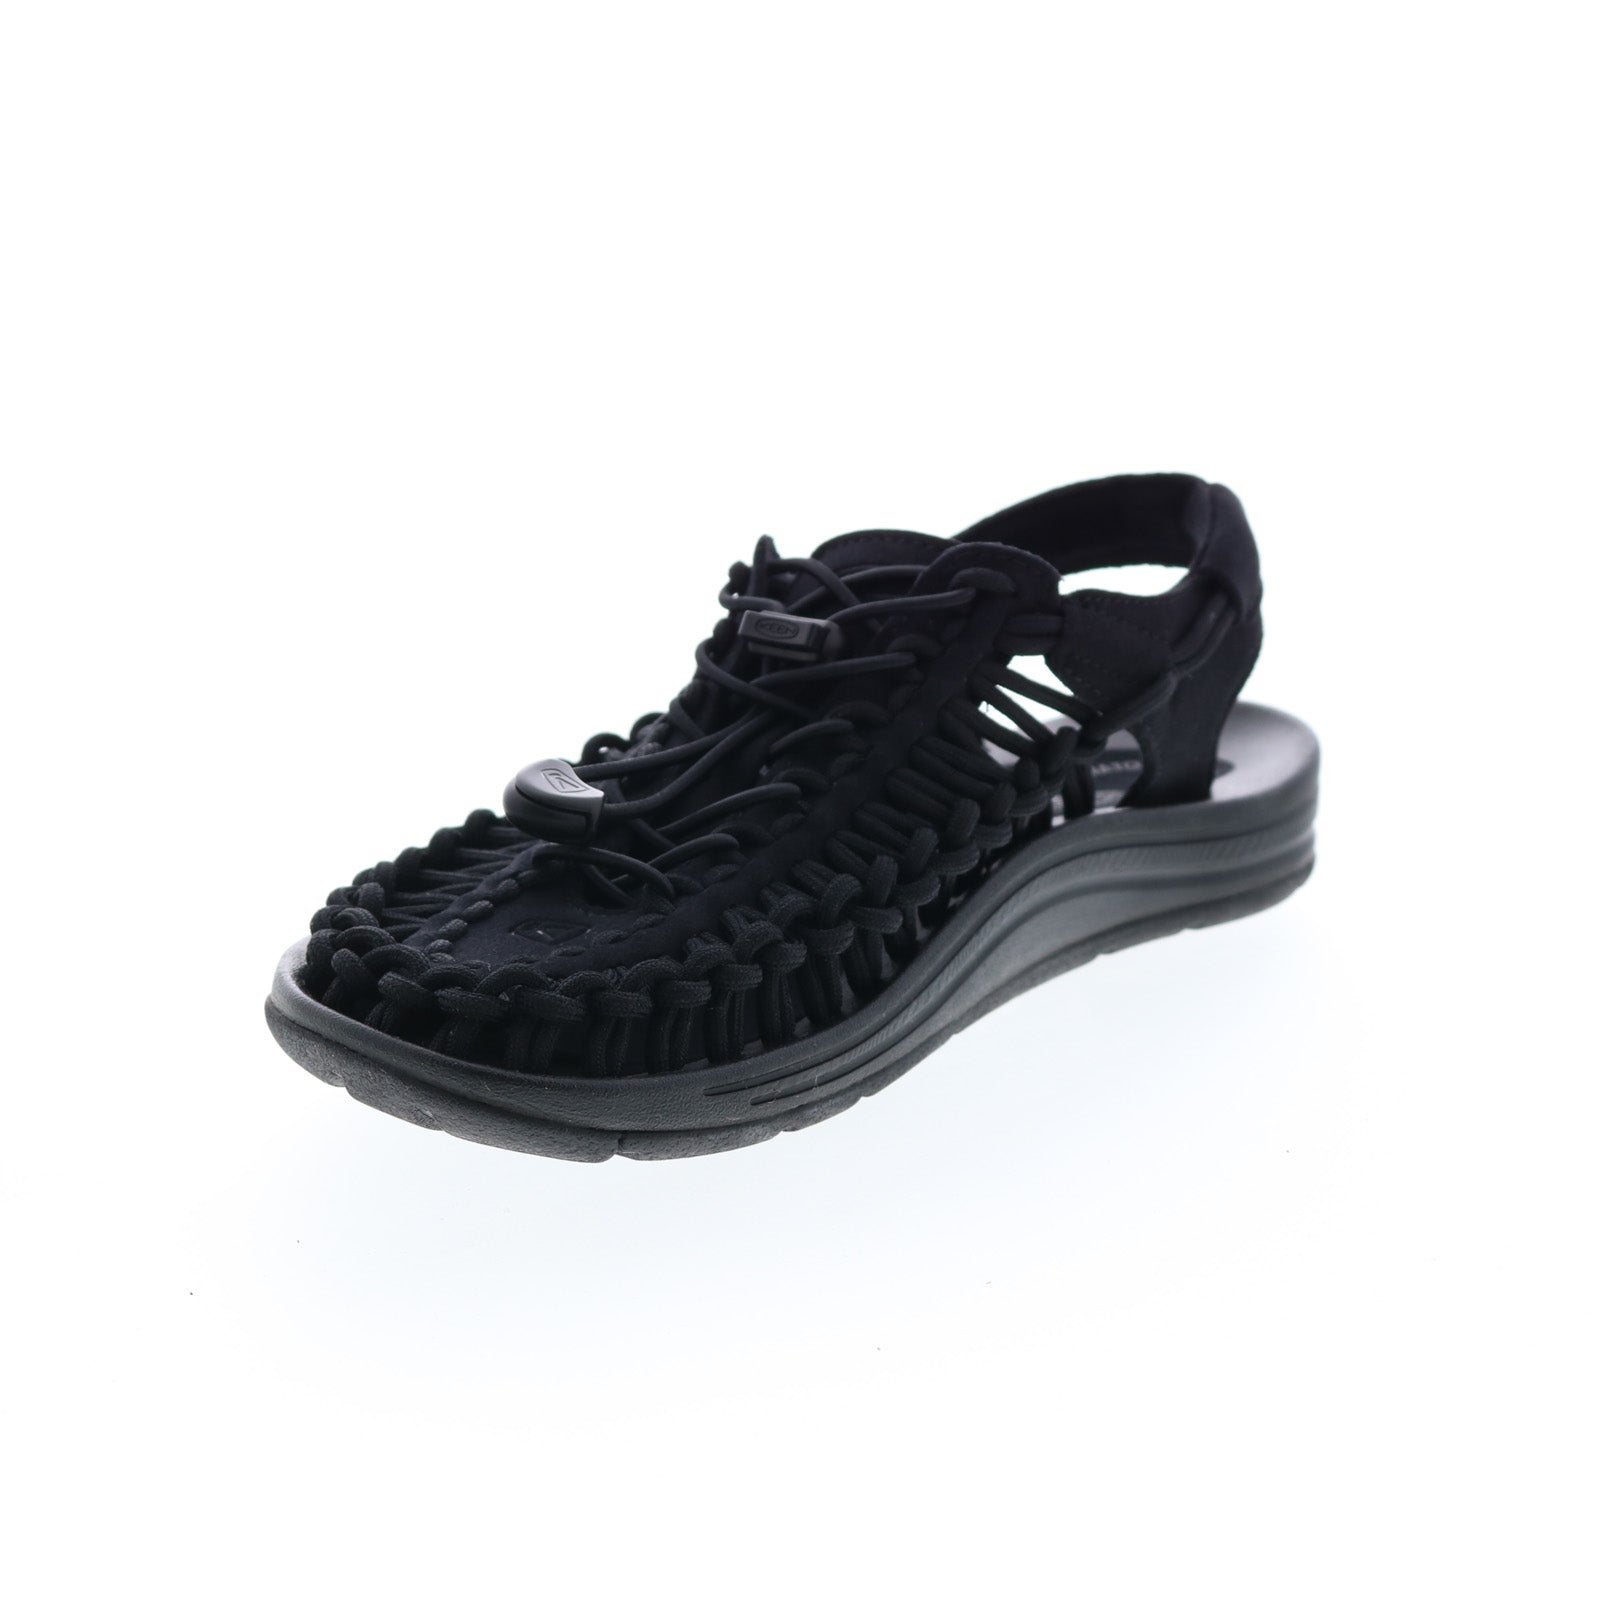 Keen Uneek 1014099 Womens Black Canvas Strap Sport Sandals